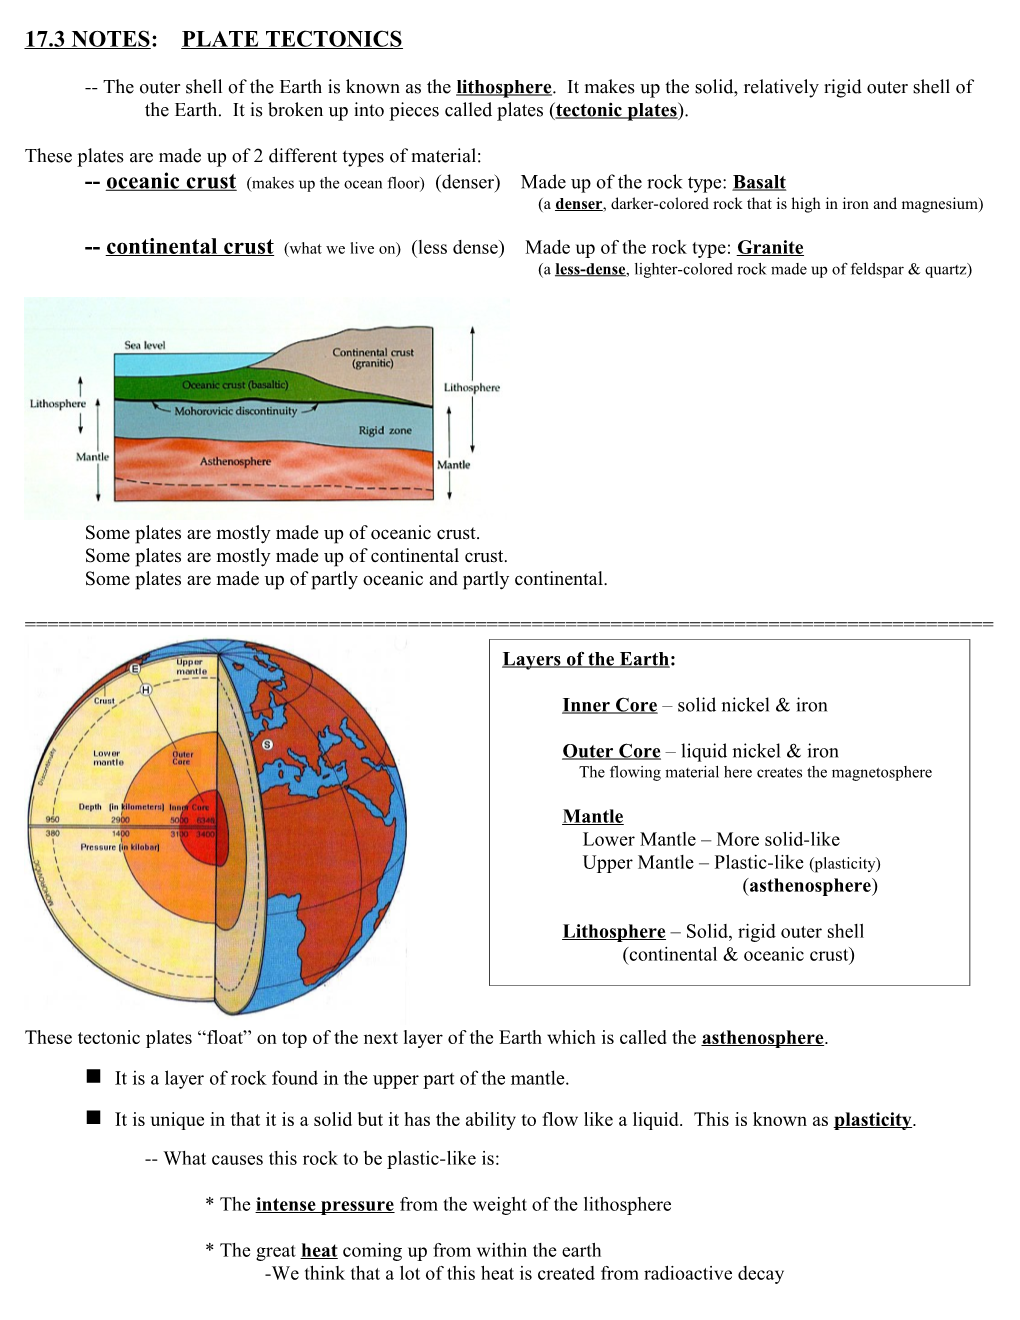 17.3 Notes: Plate Tectonics